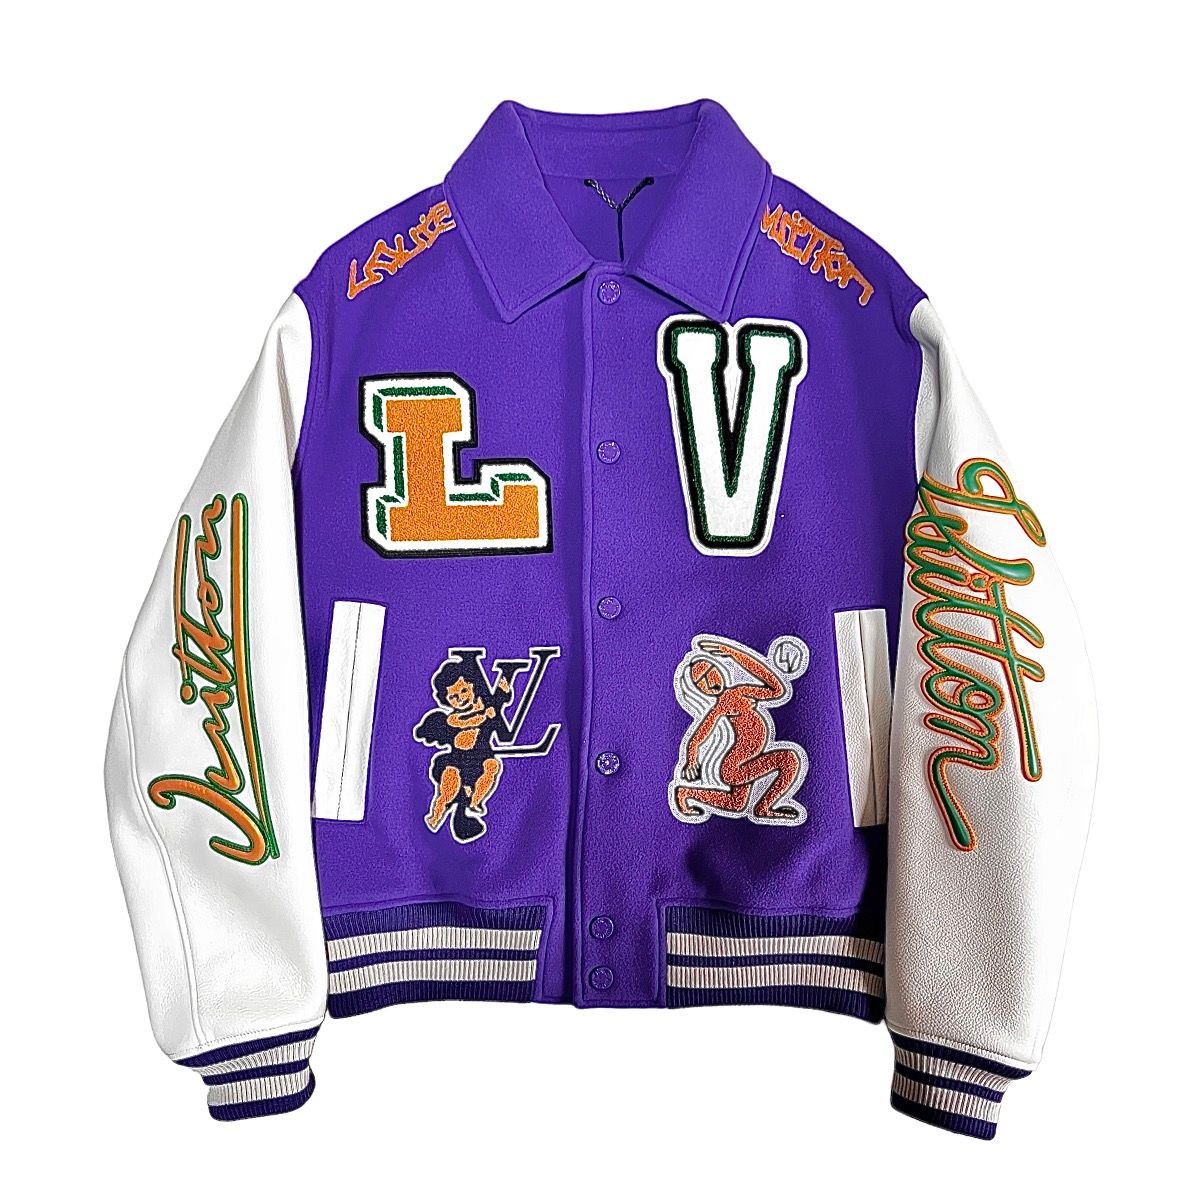 Louis Vuitton varsity jackets by Virgil Abloh